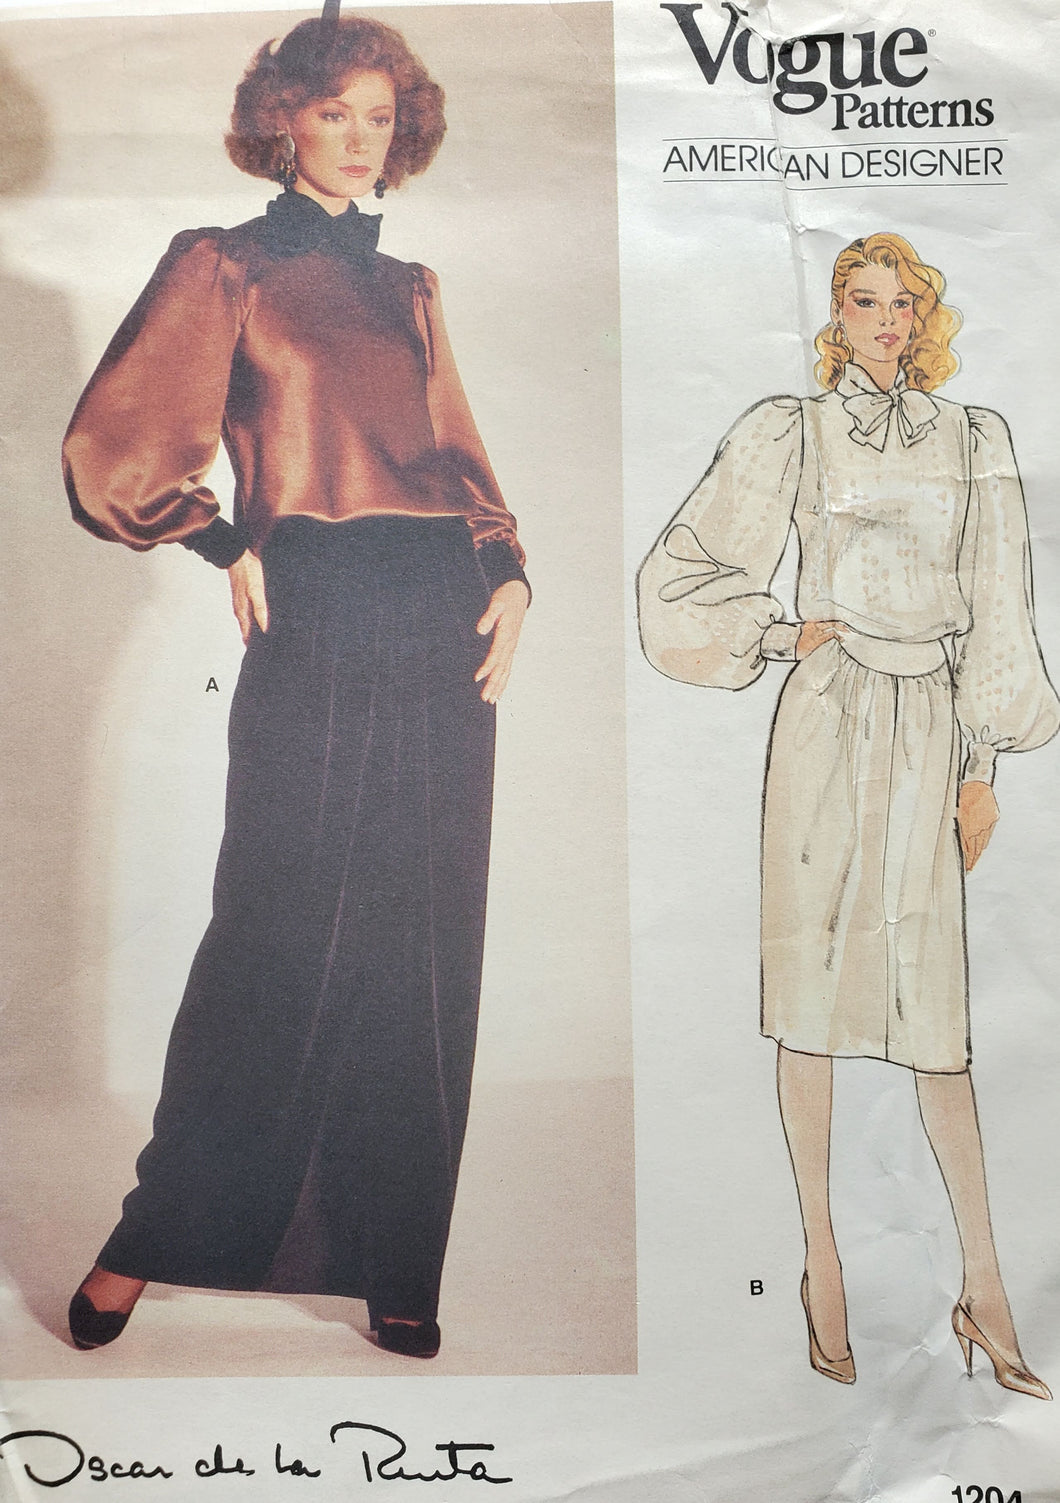 Vogue Pattern 1204, UNCUT, American Designer Oscar de la Renta, Misses Dress, Top, Necktie, Size 8